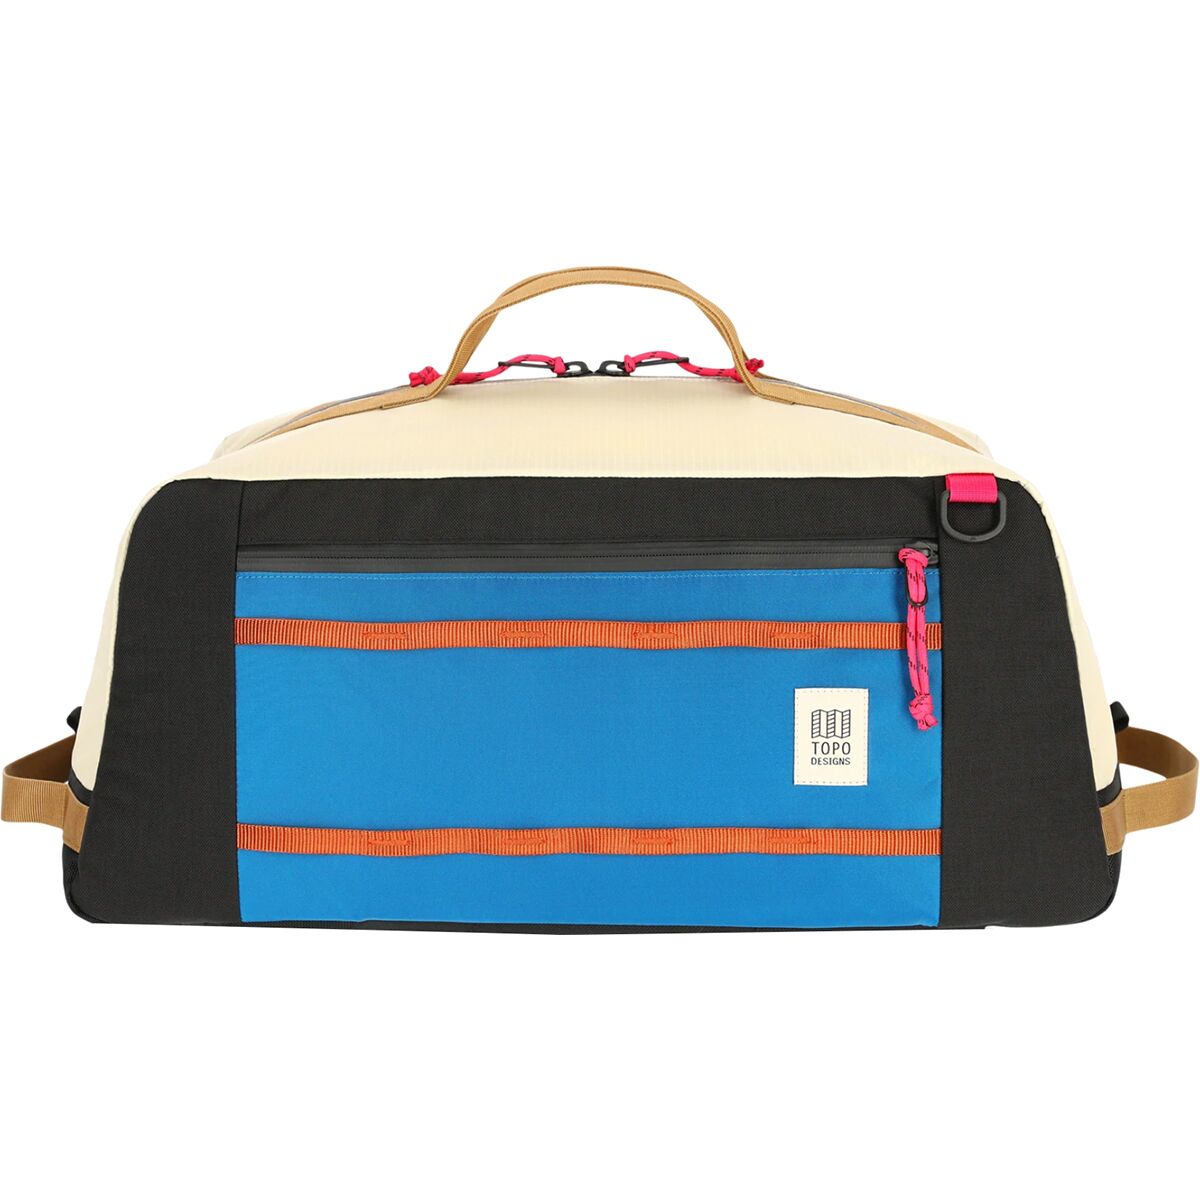 Topo Designs Mountain 40L Duffel Bag